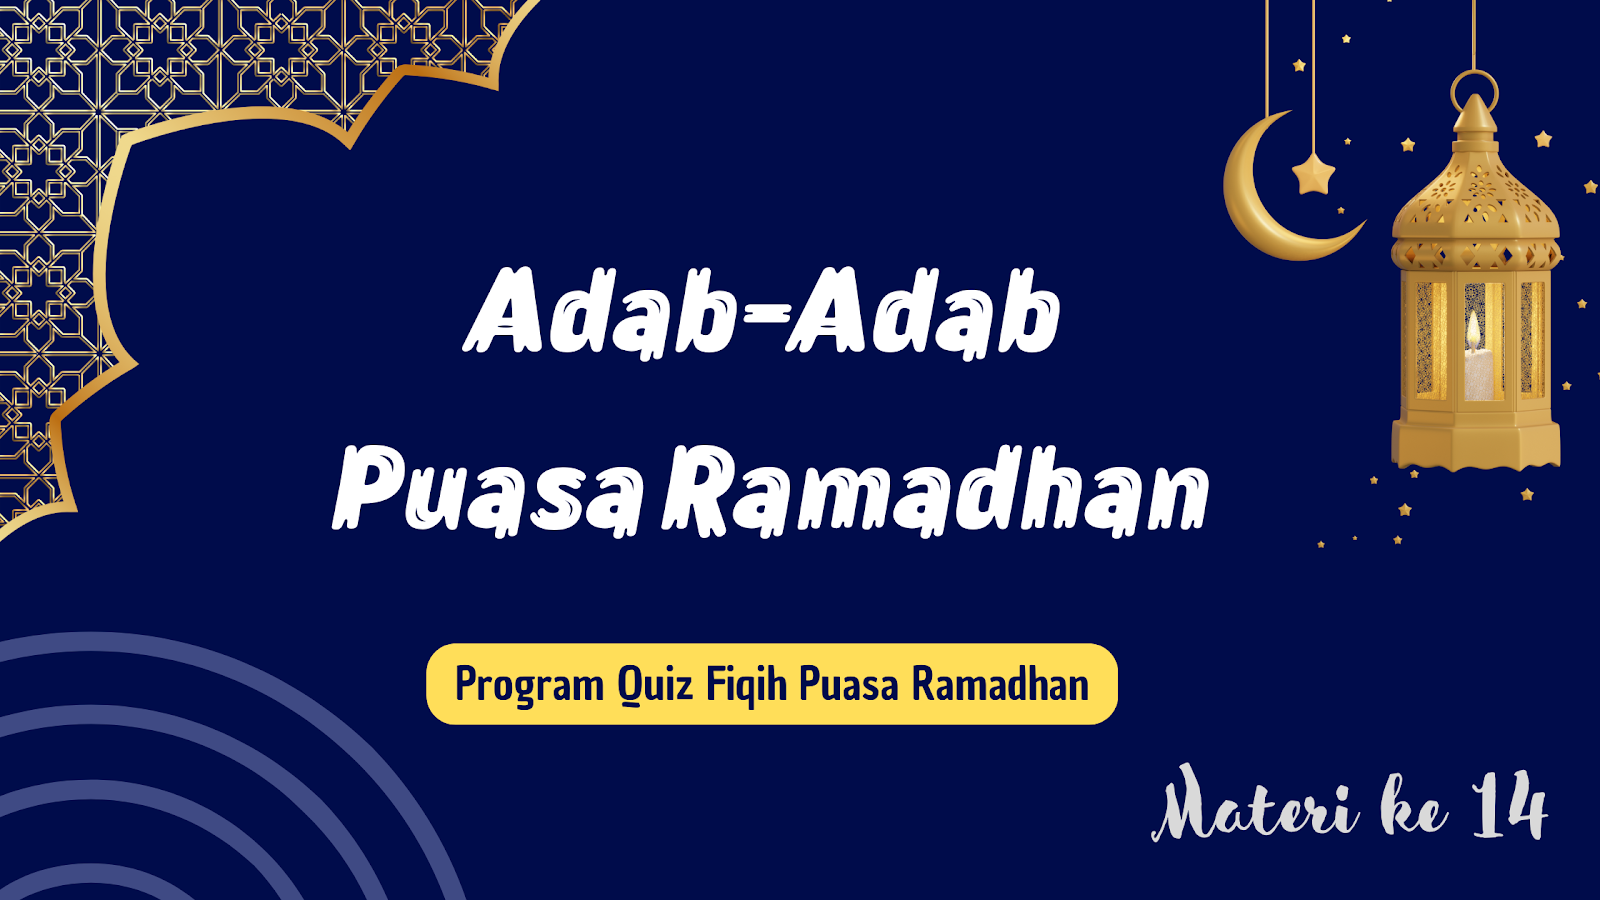 Adab-Adab Puasa Ramadhan